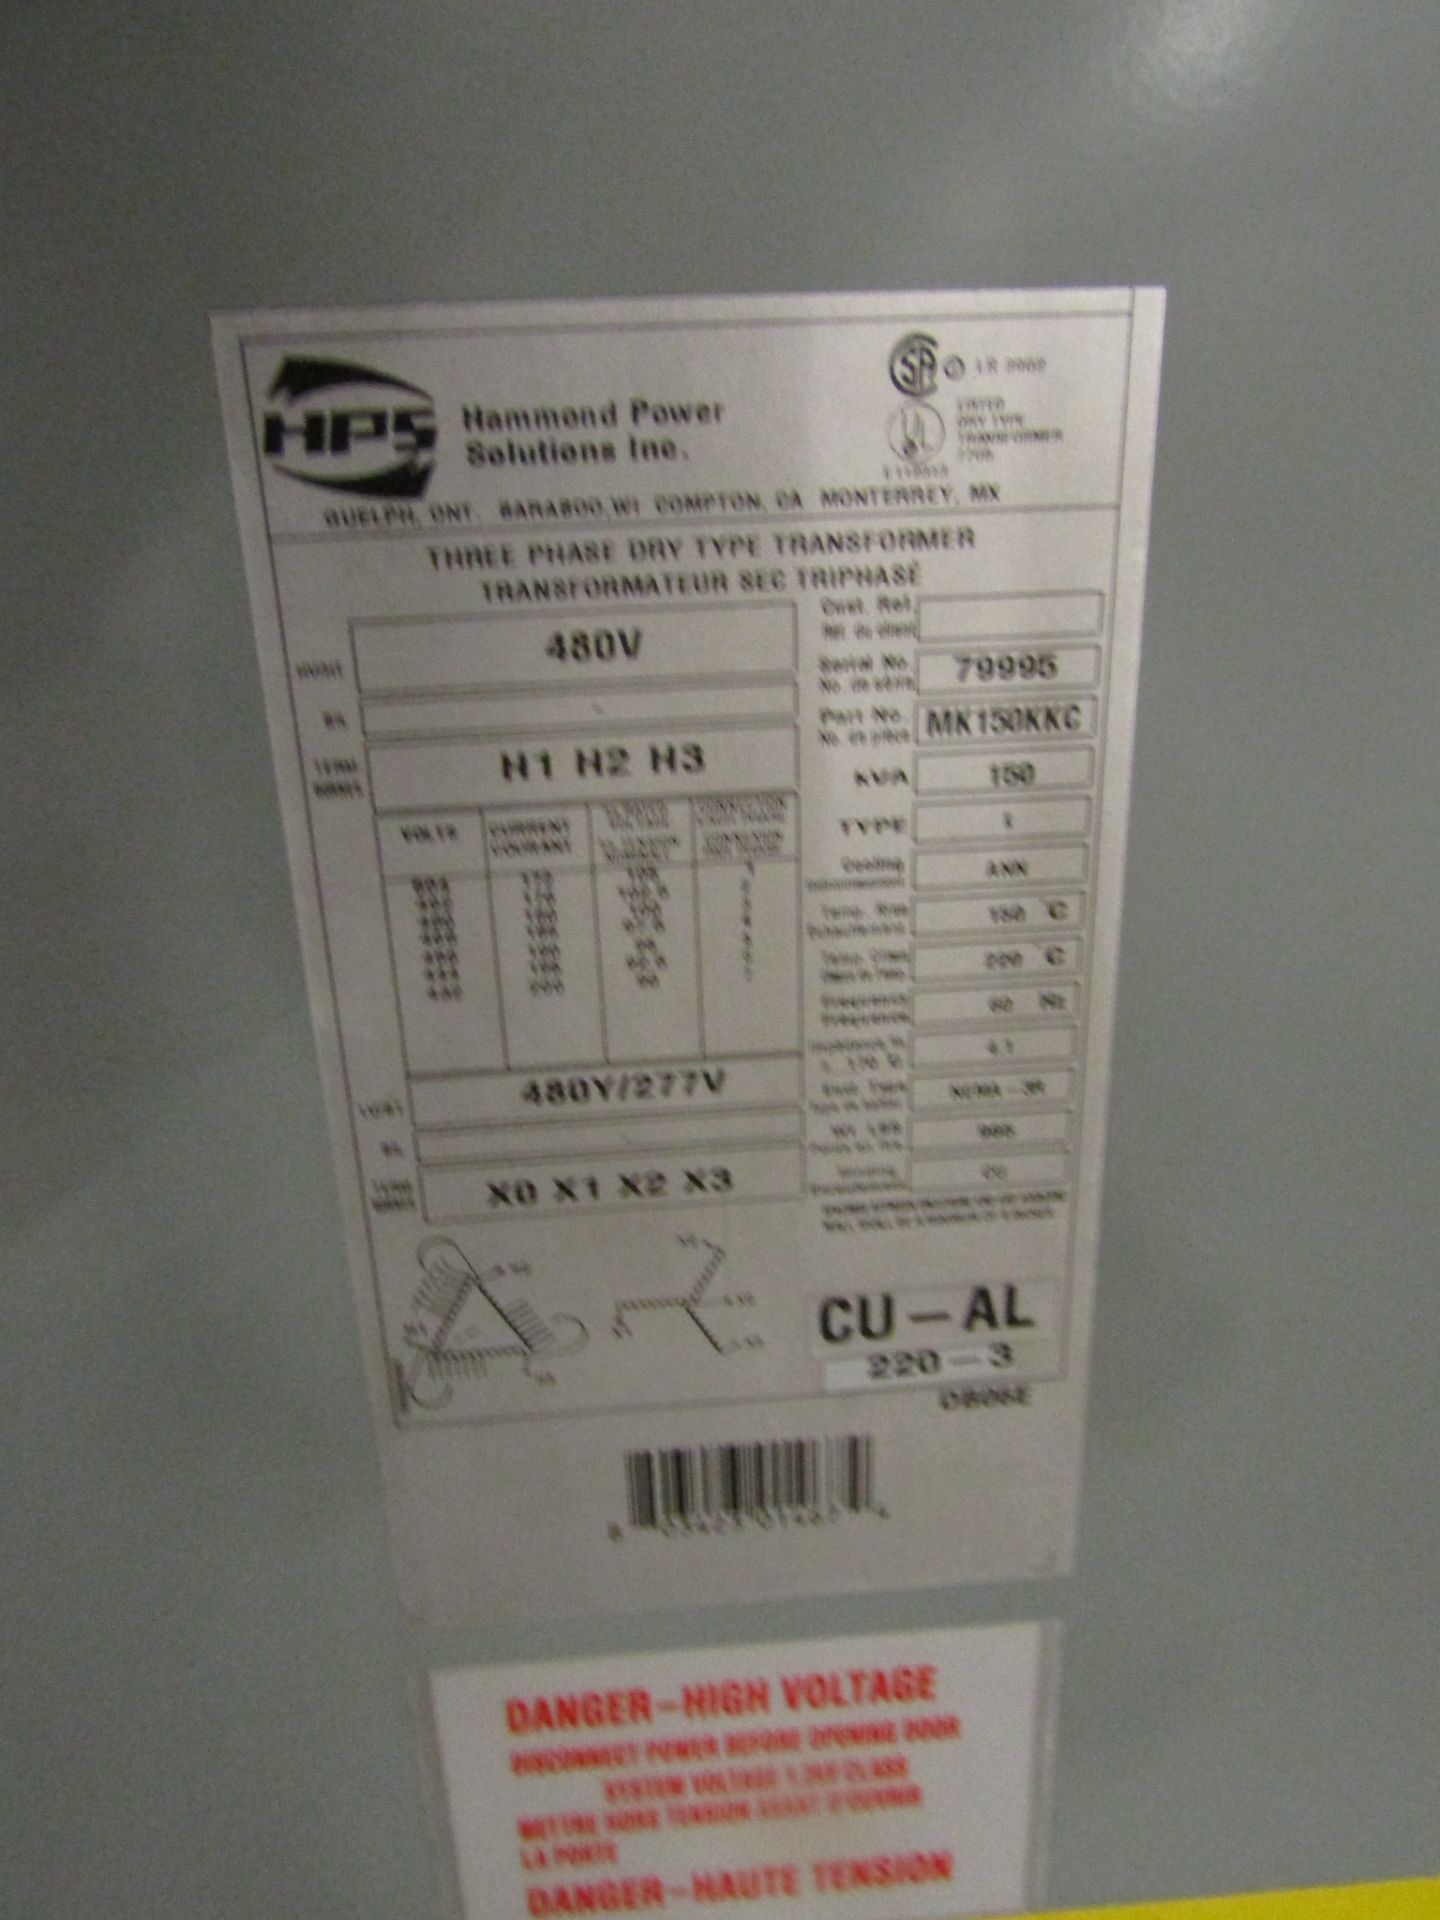 Hammond 150 KVA Electrical Transformer - 480V to 480Y / 277V 3 phase - Image 2 of 2